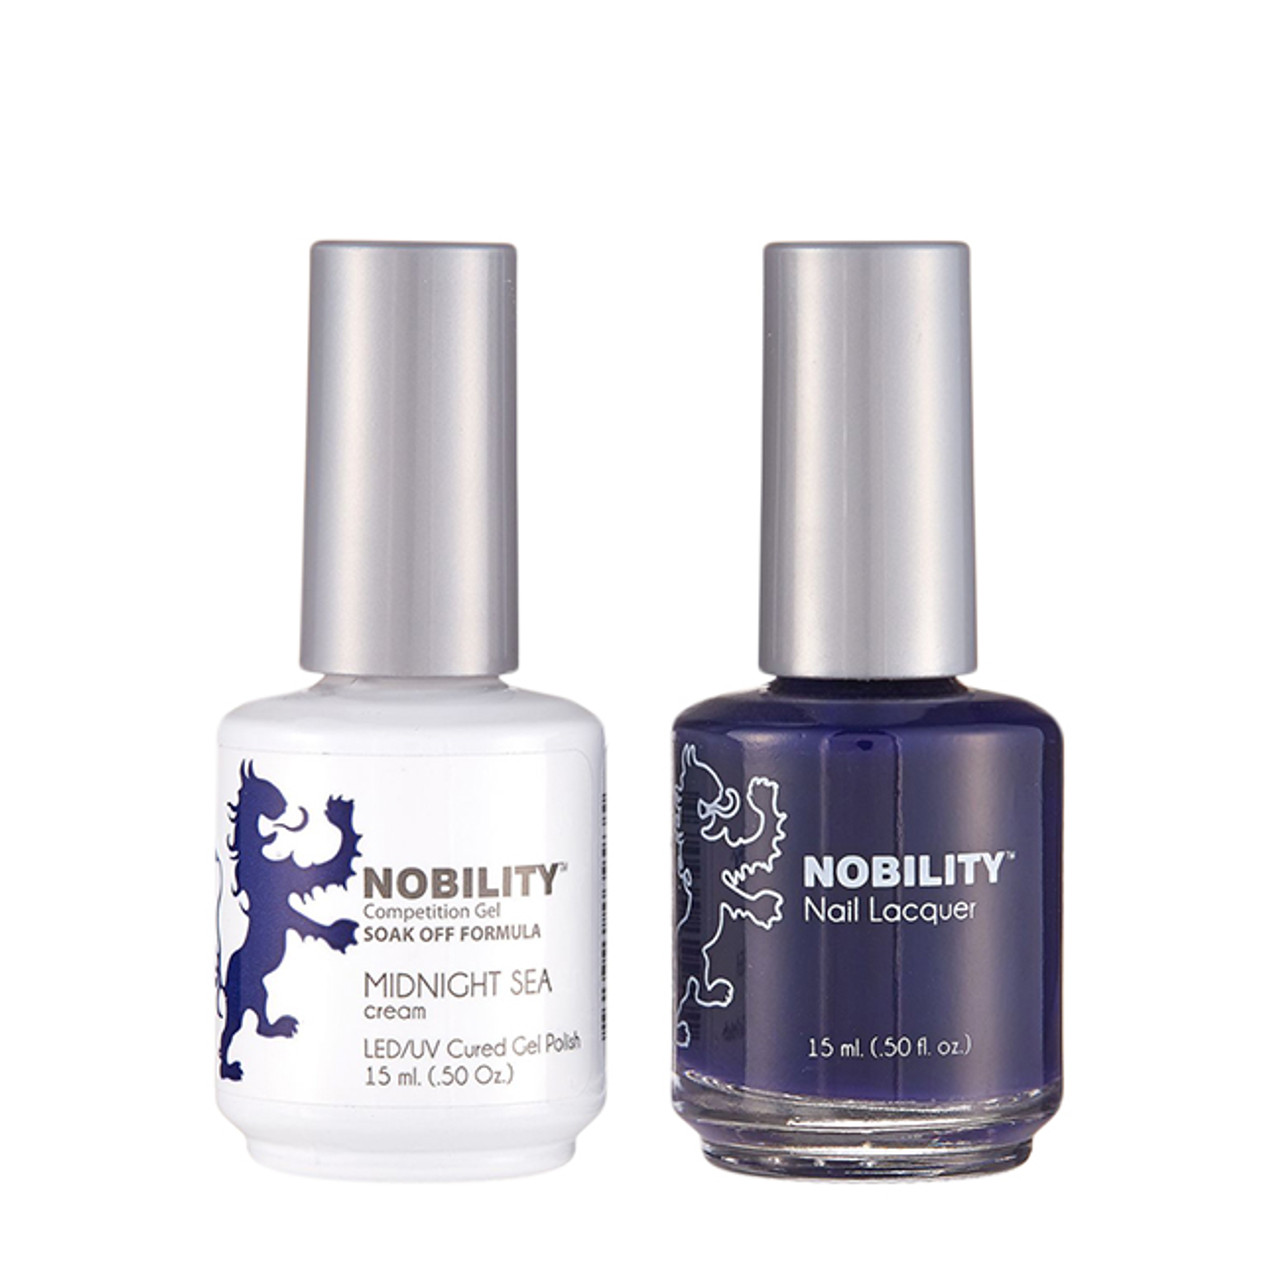 LeChat Nobility Gel Polish & Nail Lacquer Duo Set Midnight Sea - .5 oz / 15 ml